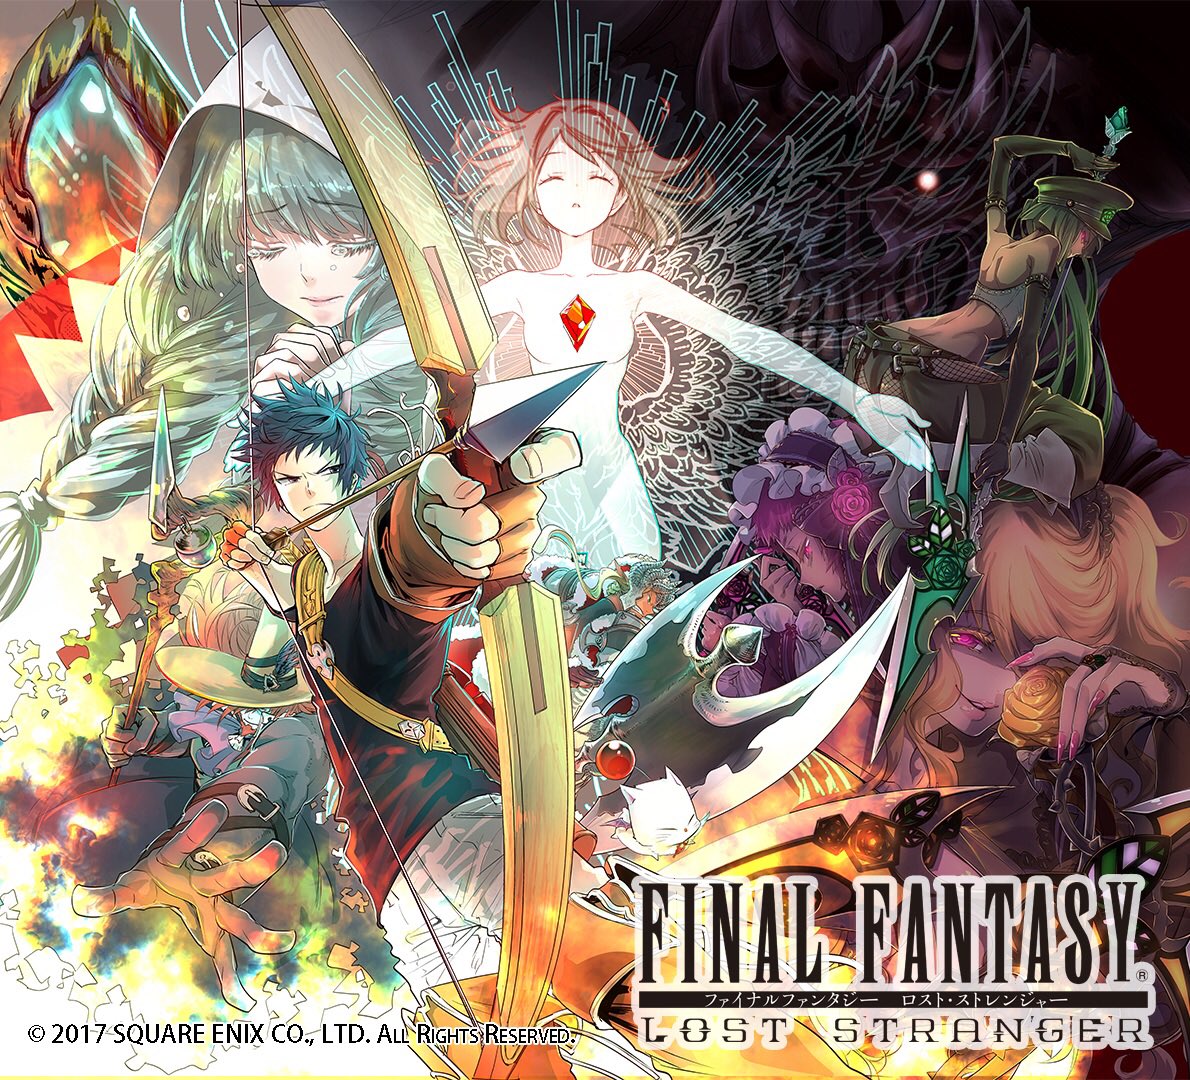 Japanese Anime Japan Manga Final Fantasy Lost Stranger Vol 1 Medalex Rs